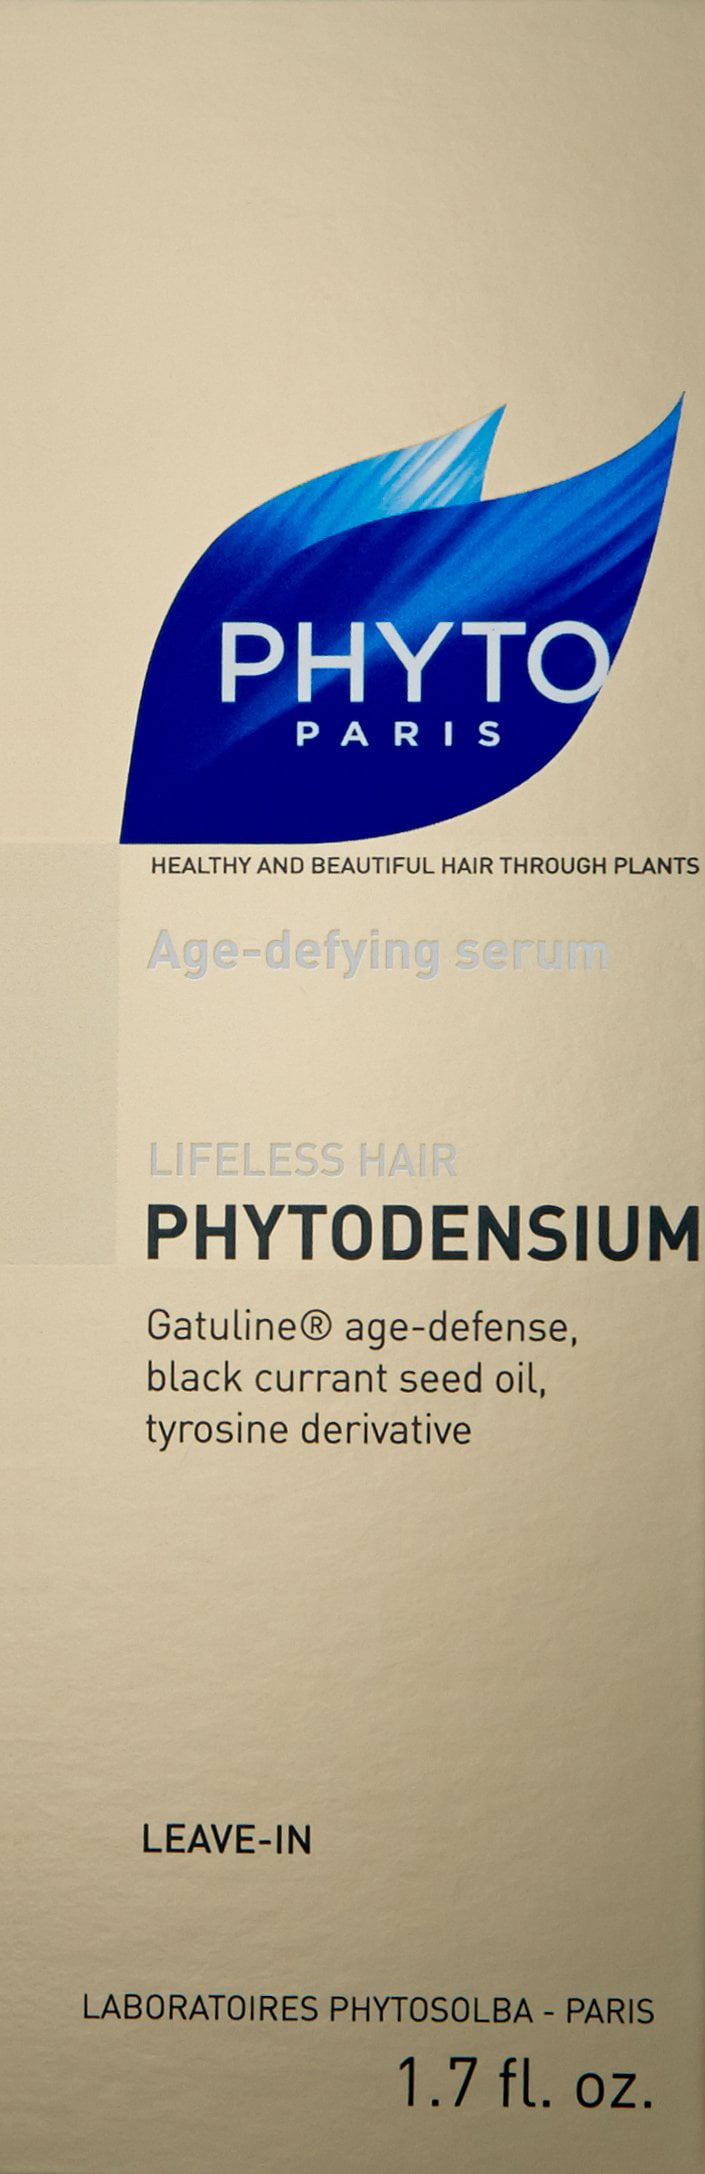 phytodensium anti aging szérum